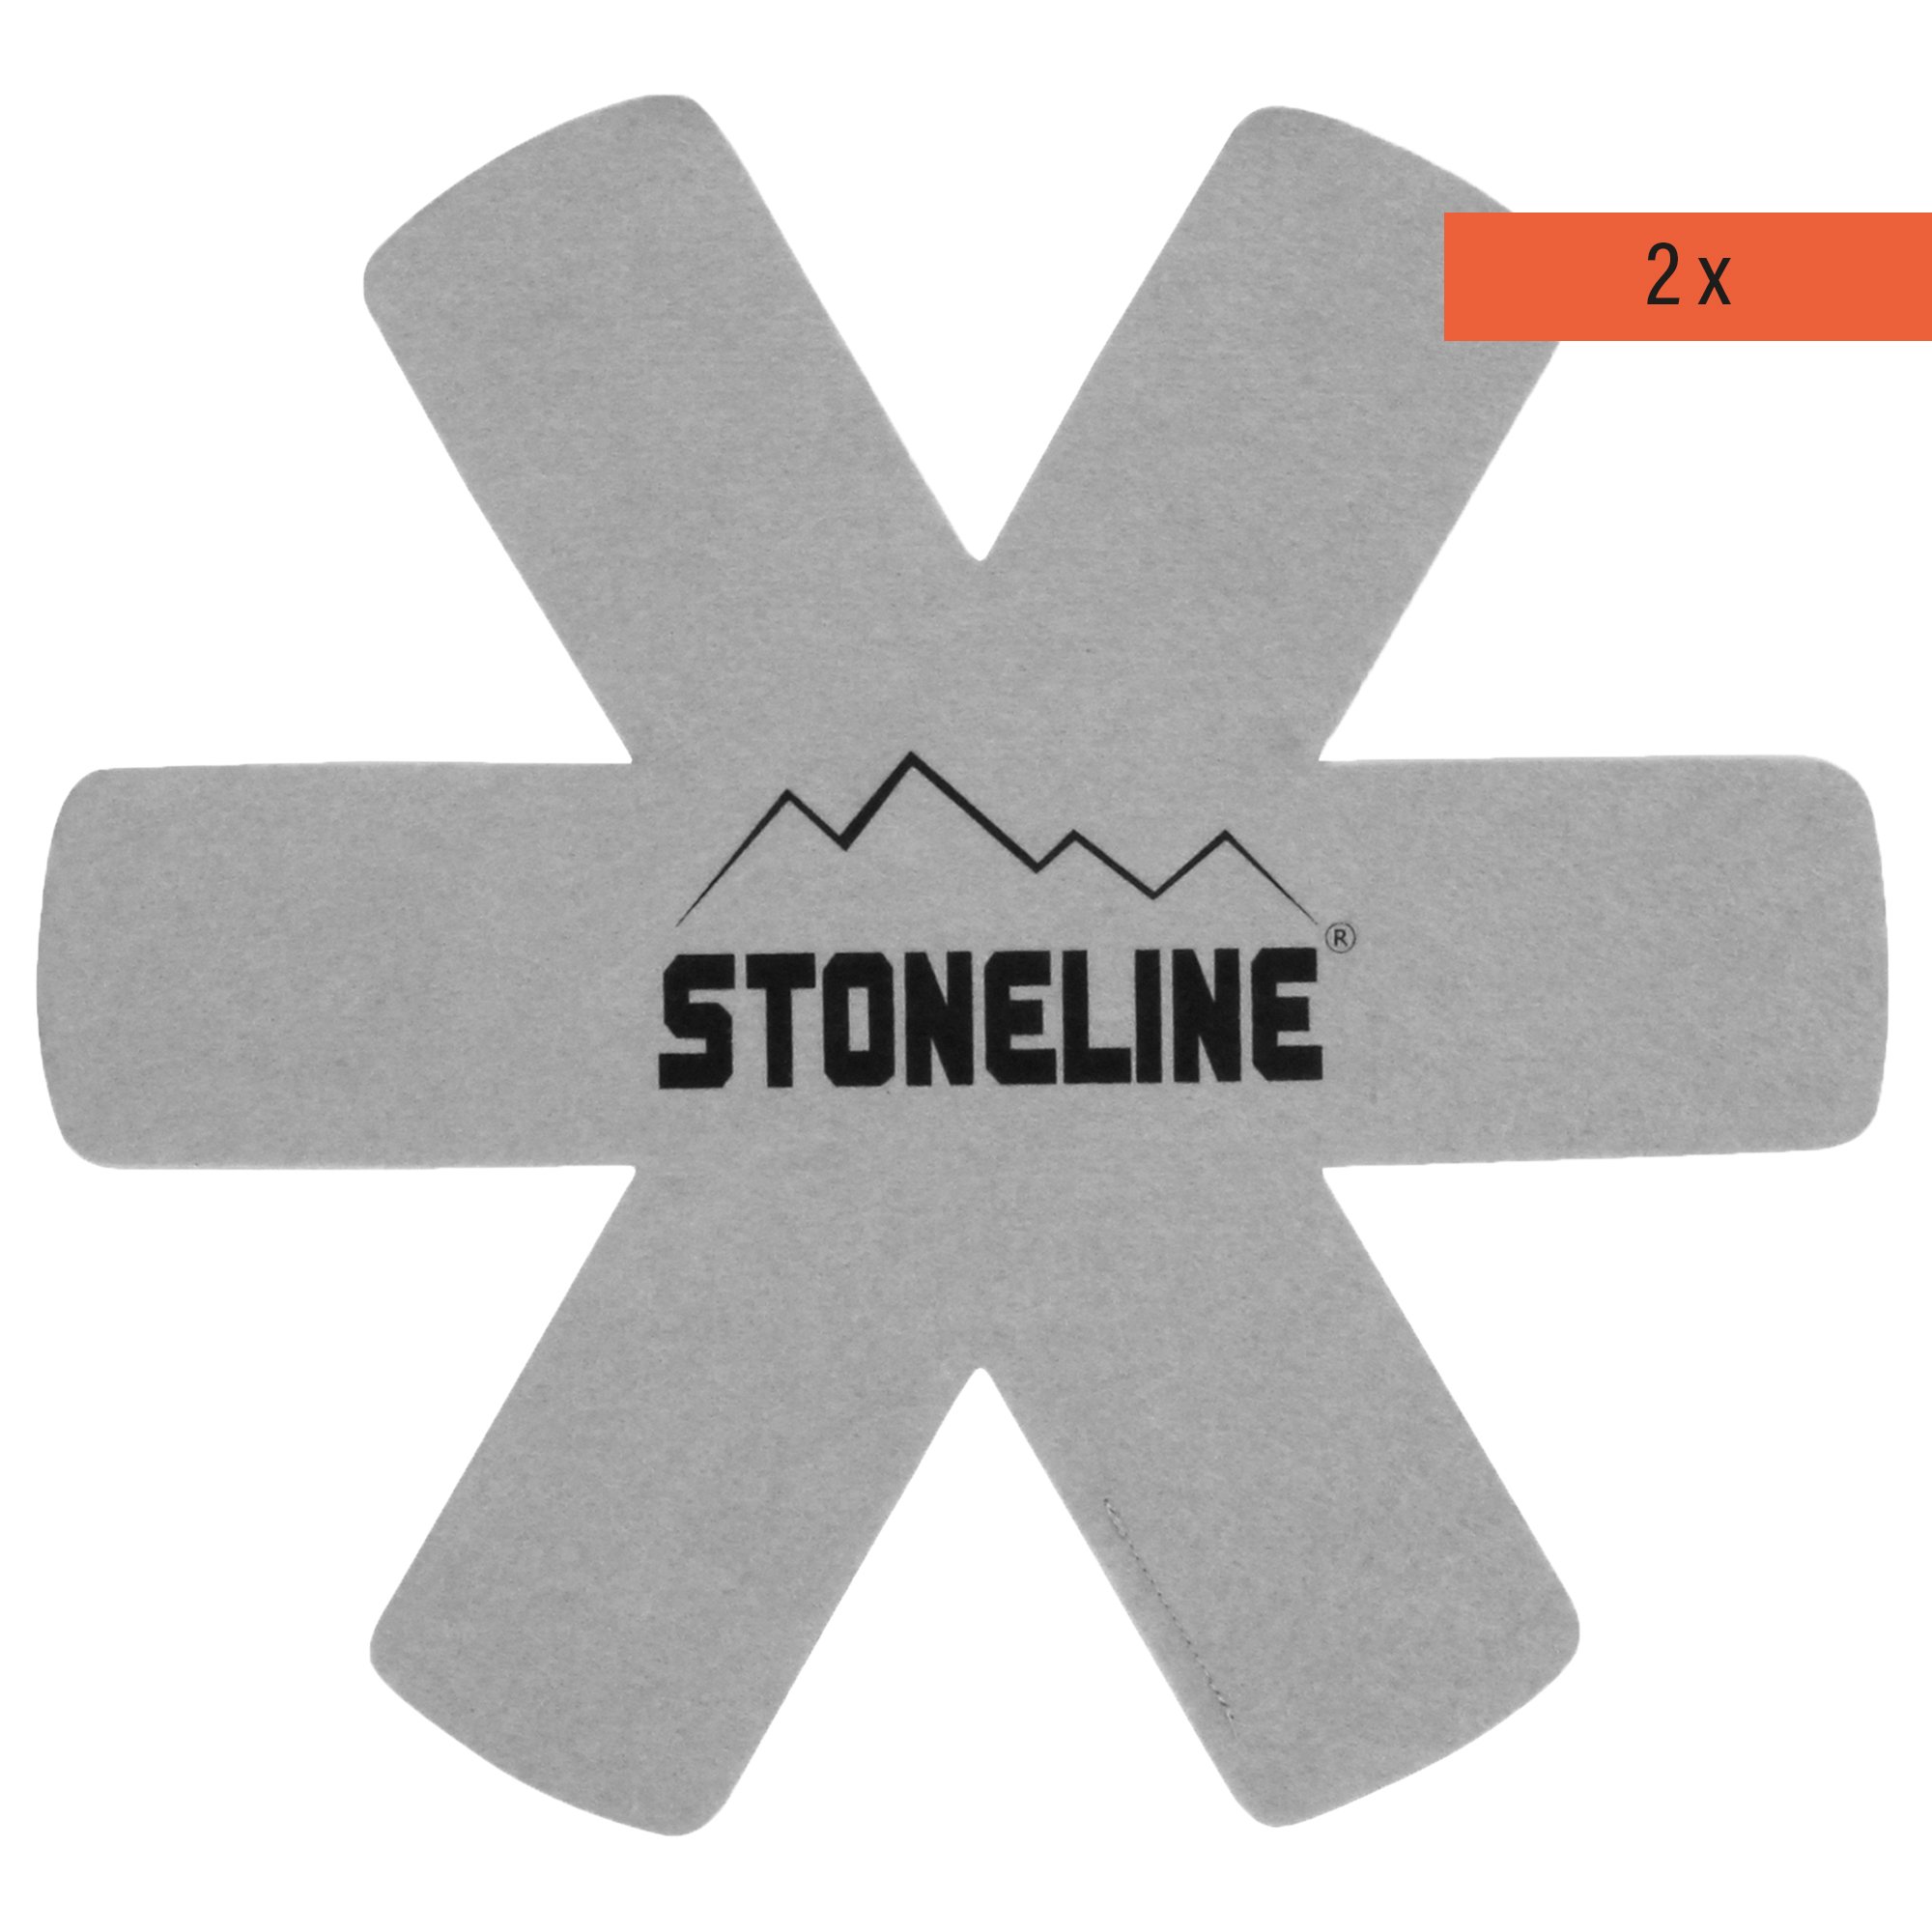 STONELINE® 2 pc Pot & Pan Protector Set 38 cm, grey | Coaster Stacking Protectors